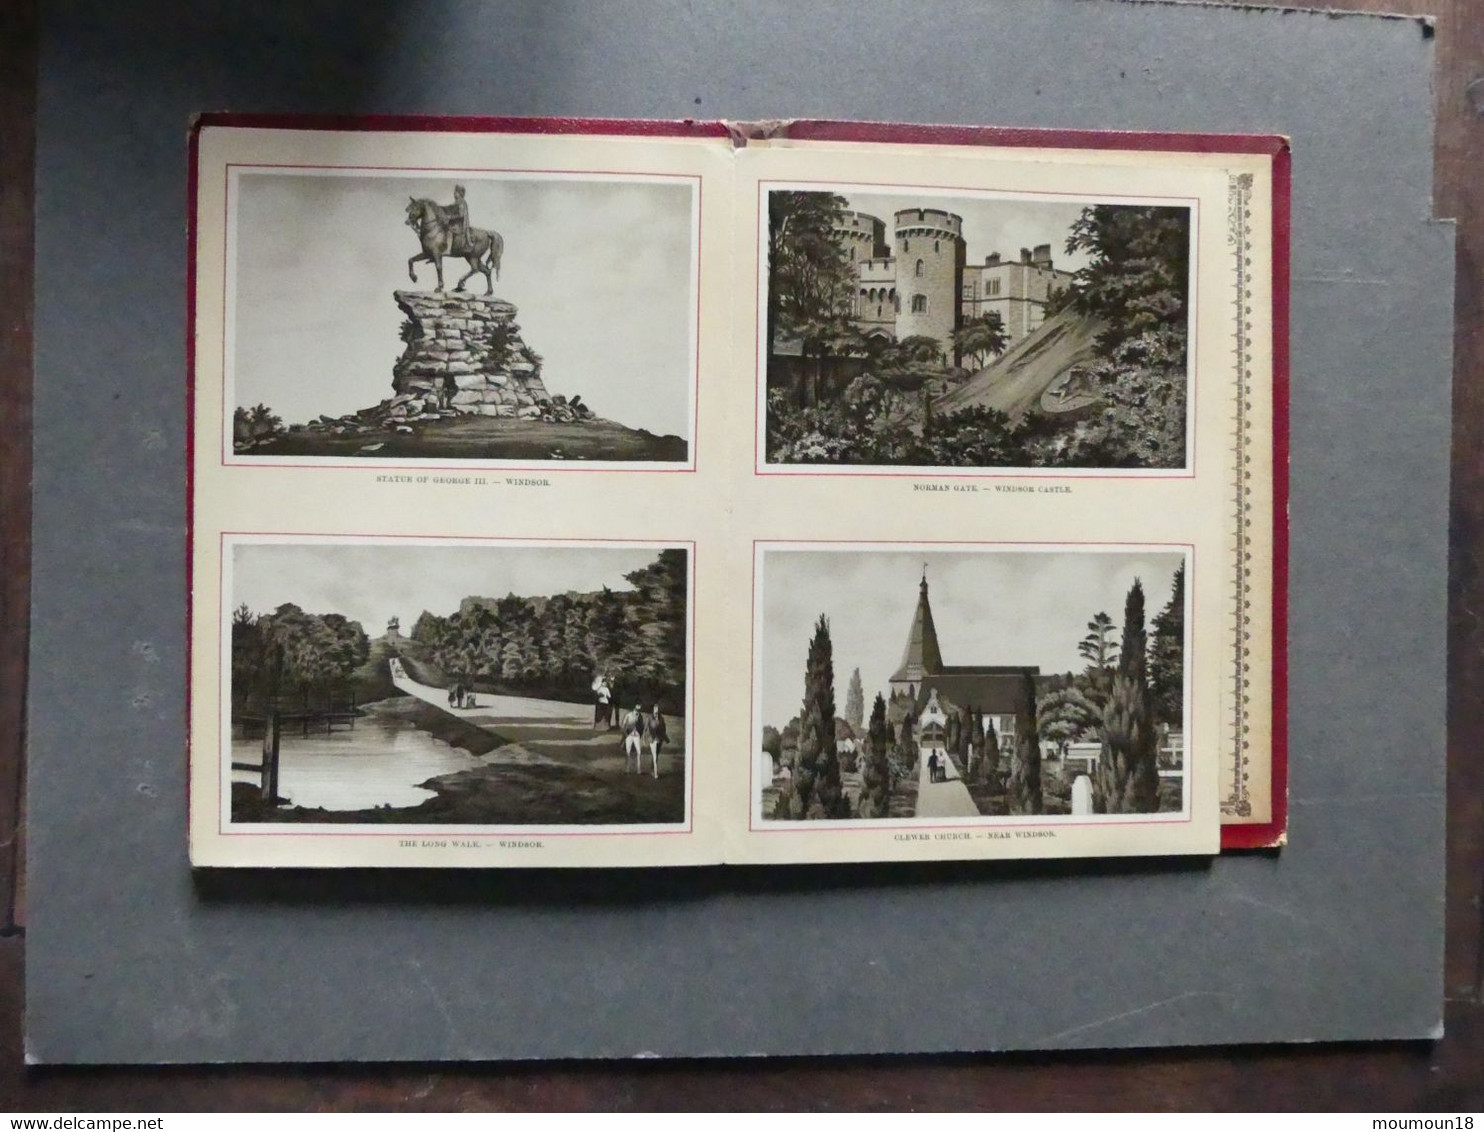 The album of Windsor views 1890